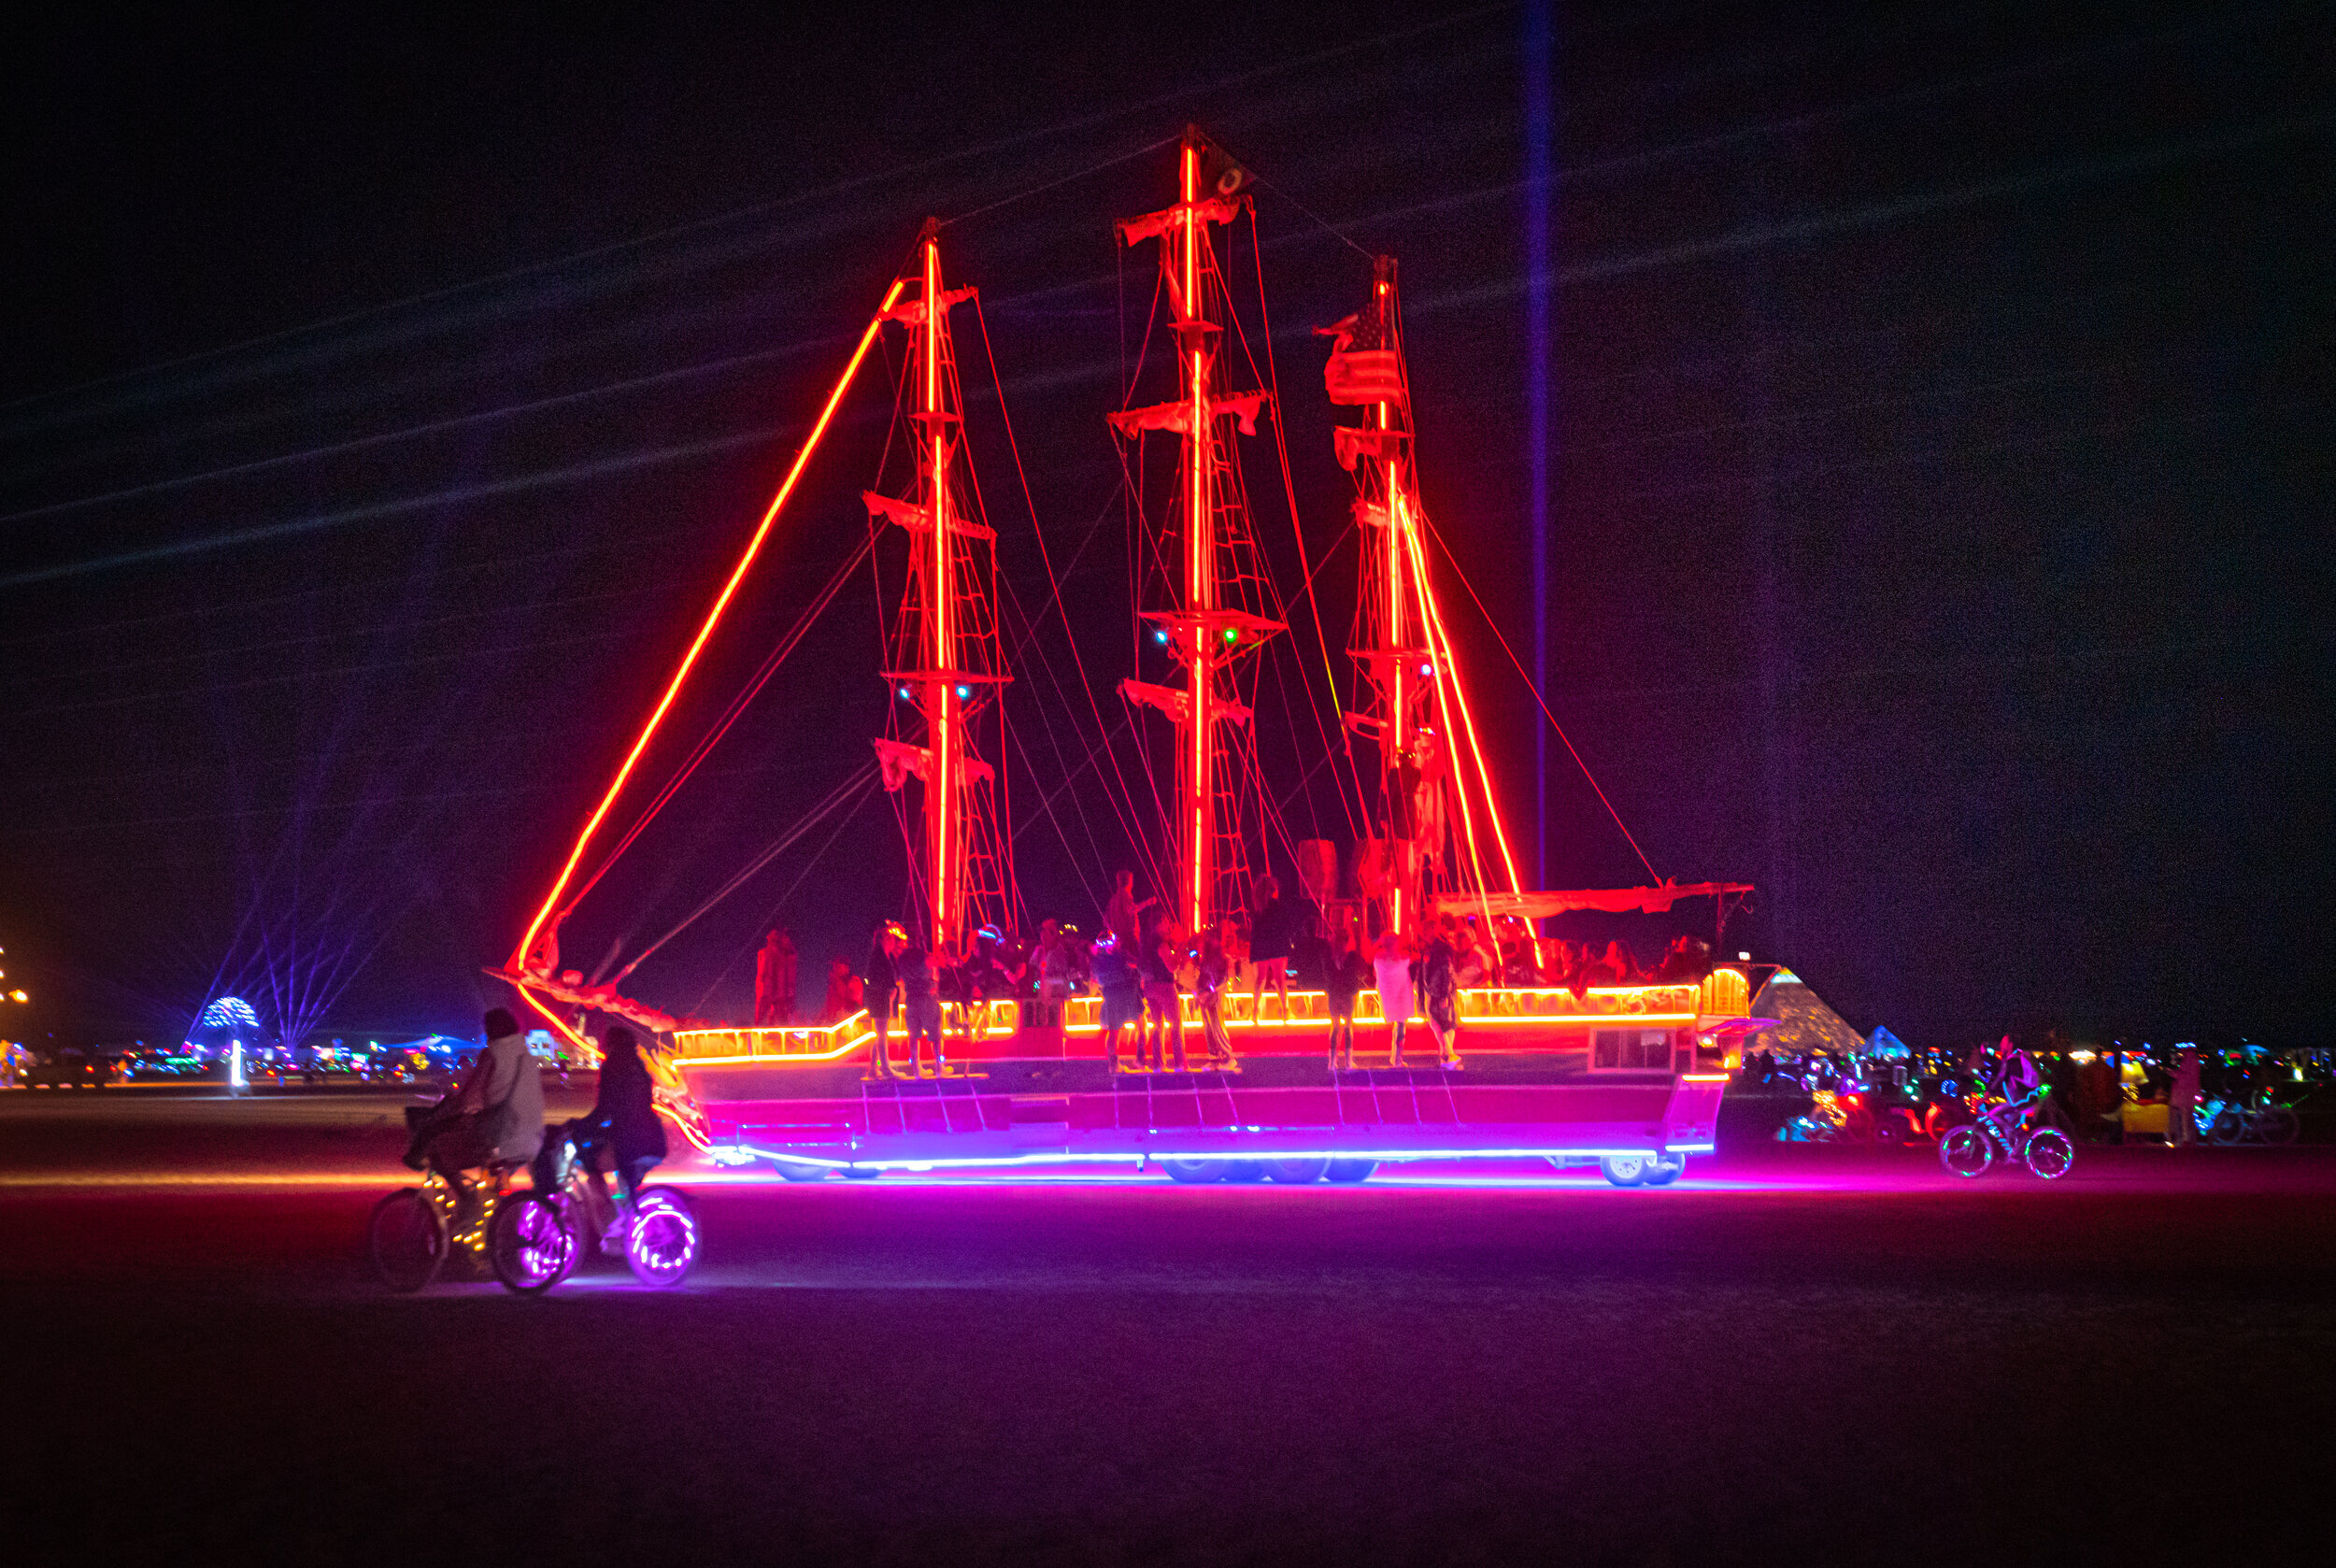 Burning Man 2019 - Night regatta led by the SS Monaco